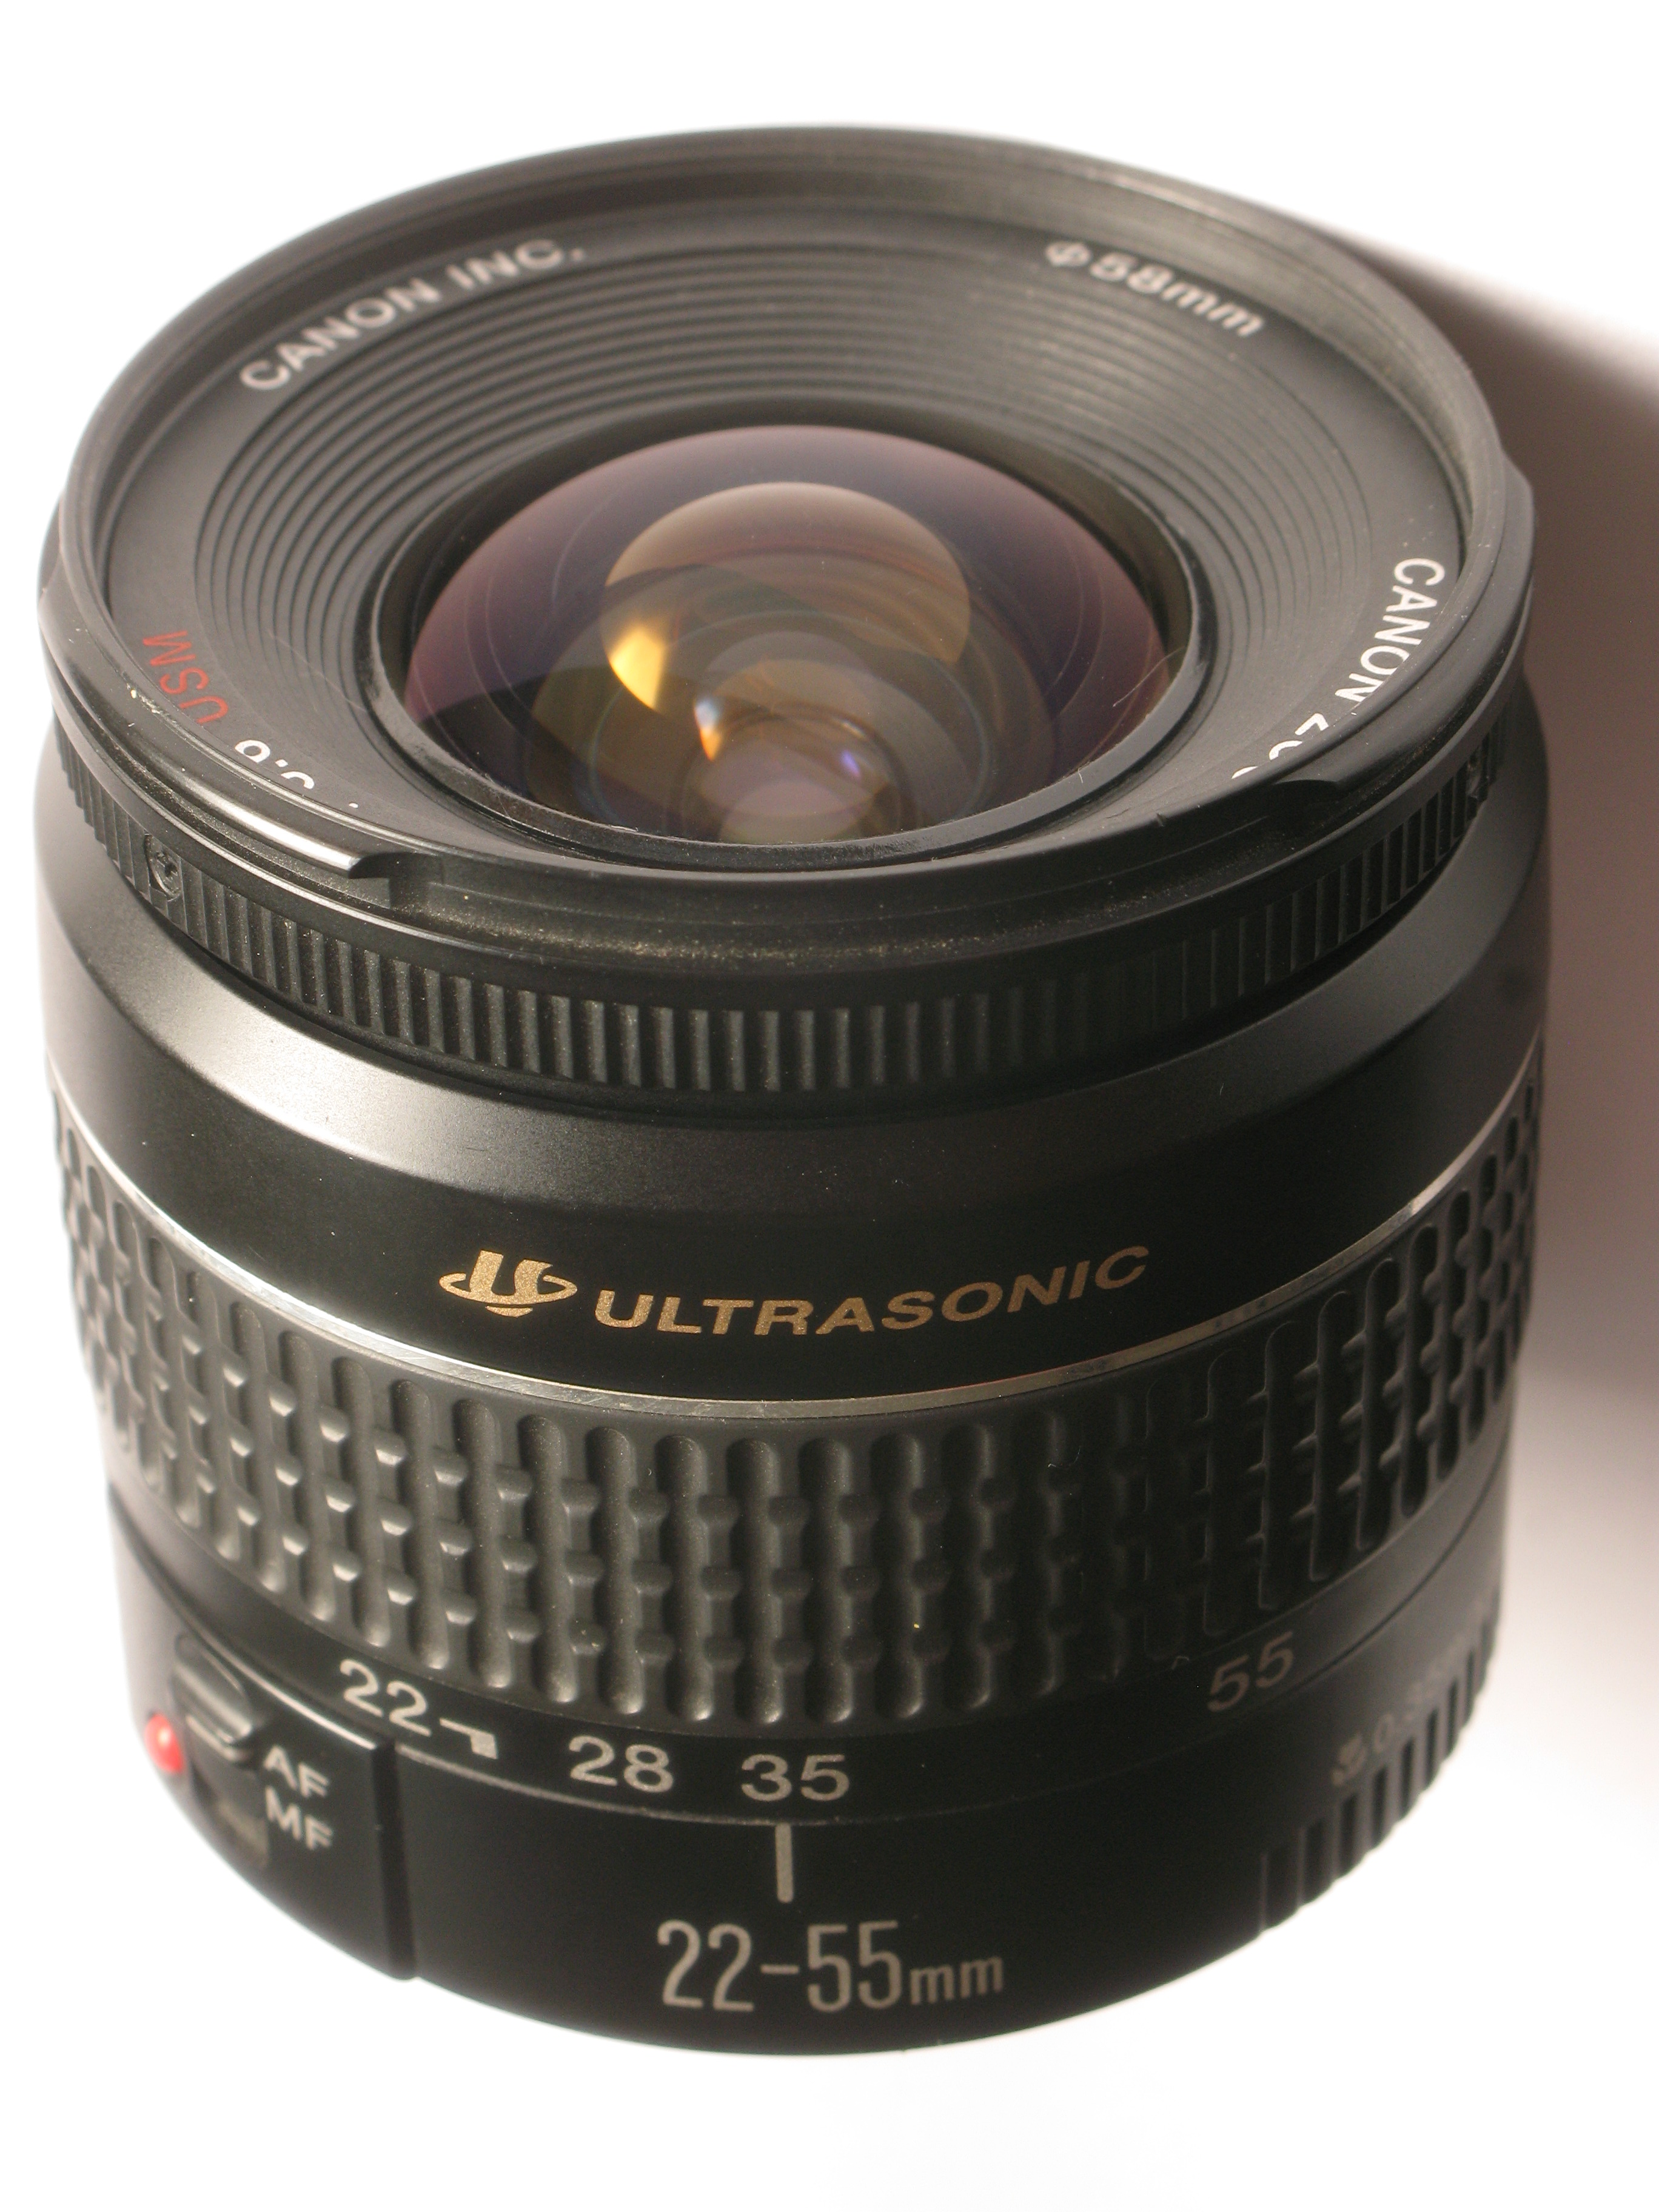 Canon EF 22-55mm lens - Wikipedia